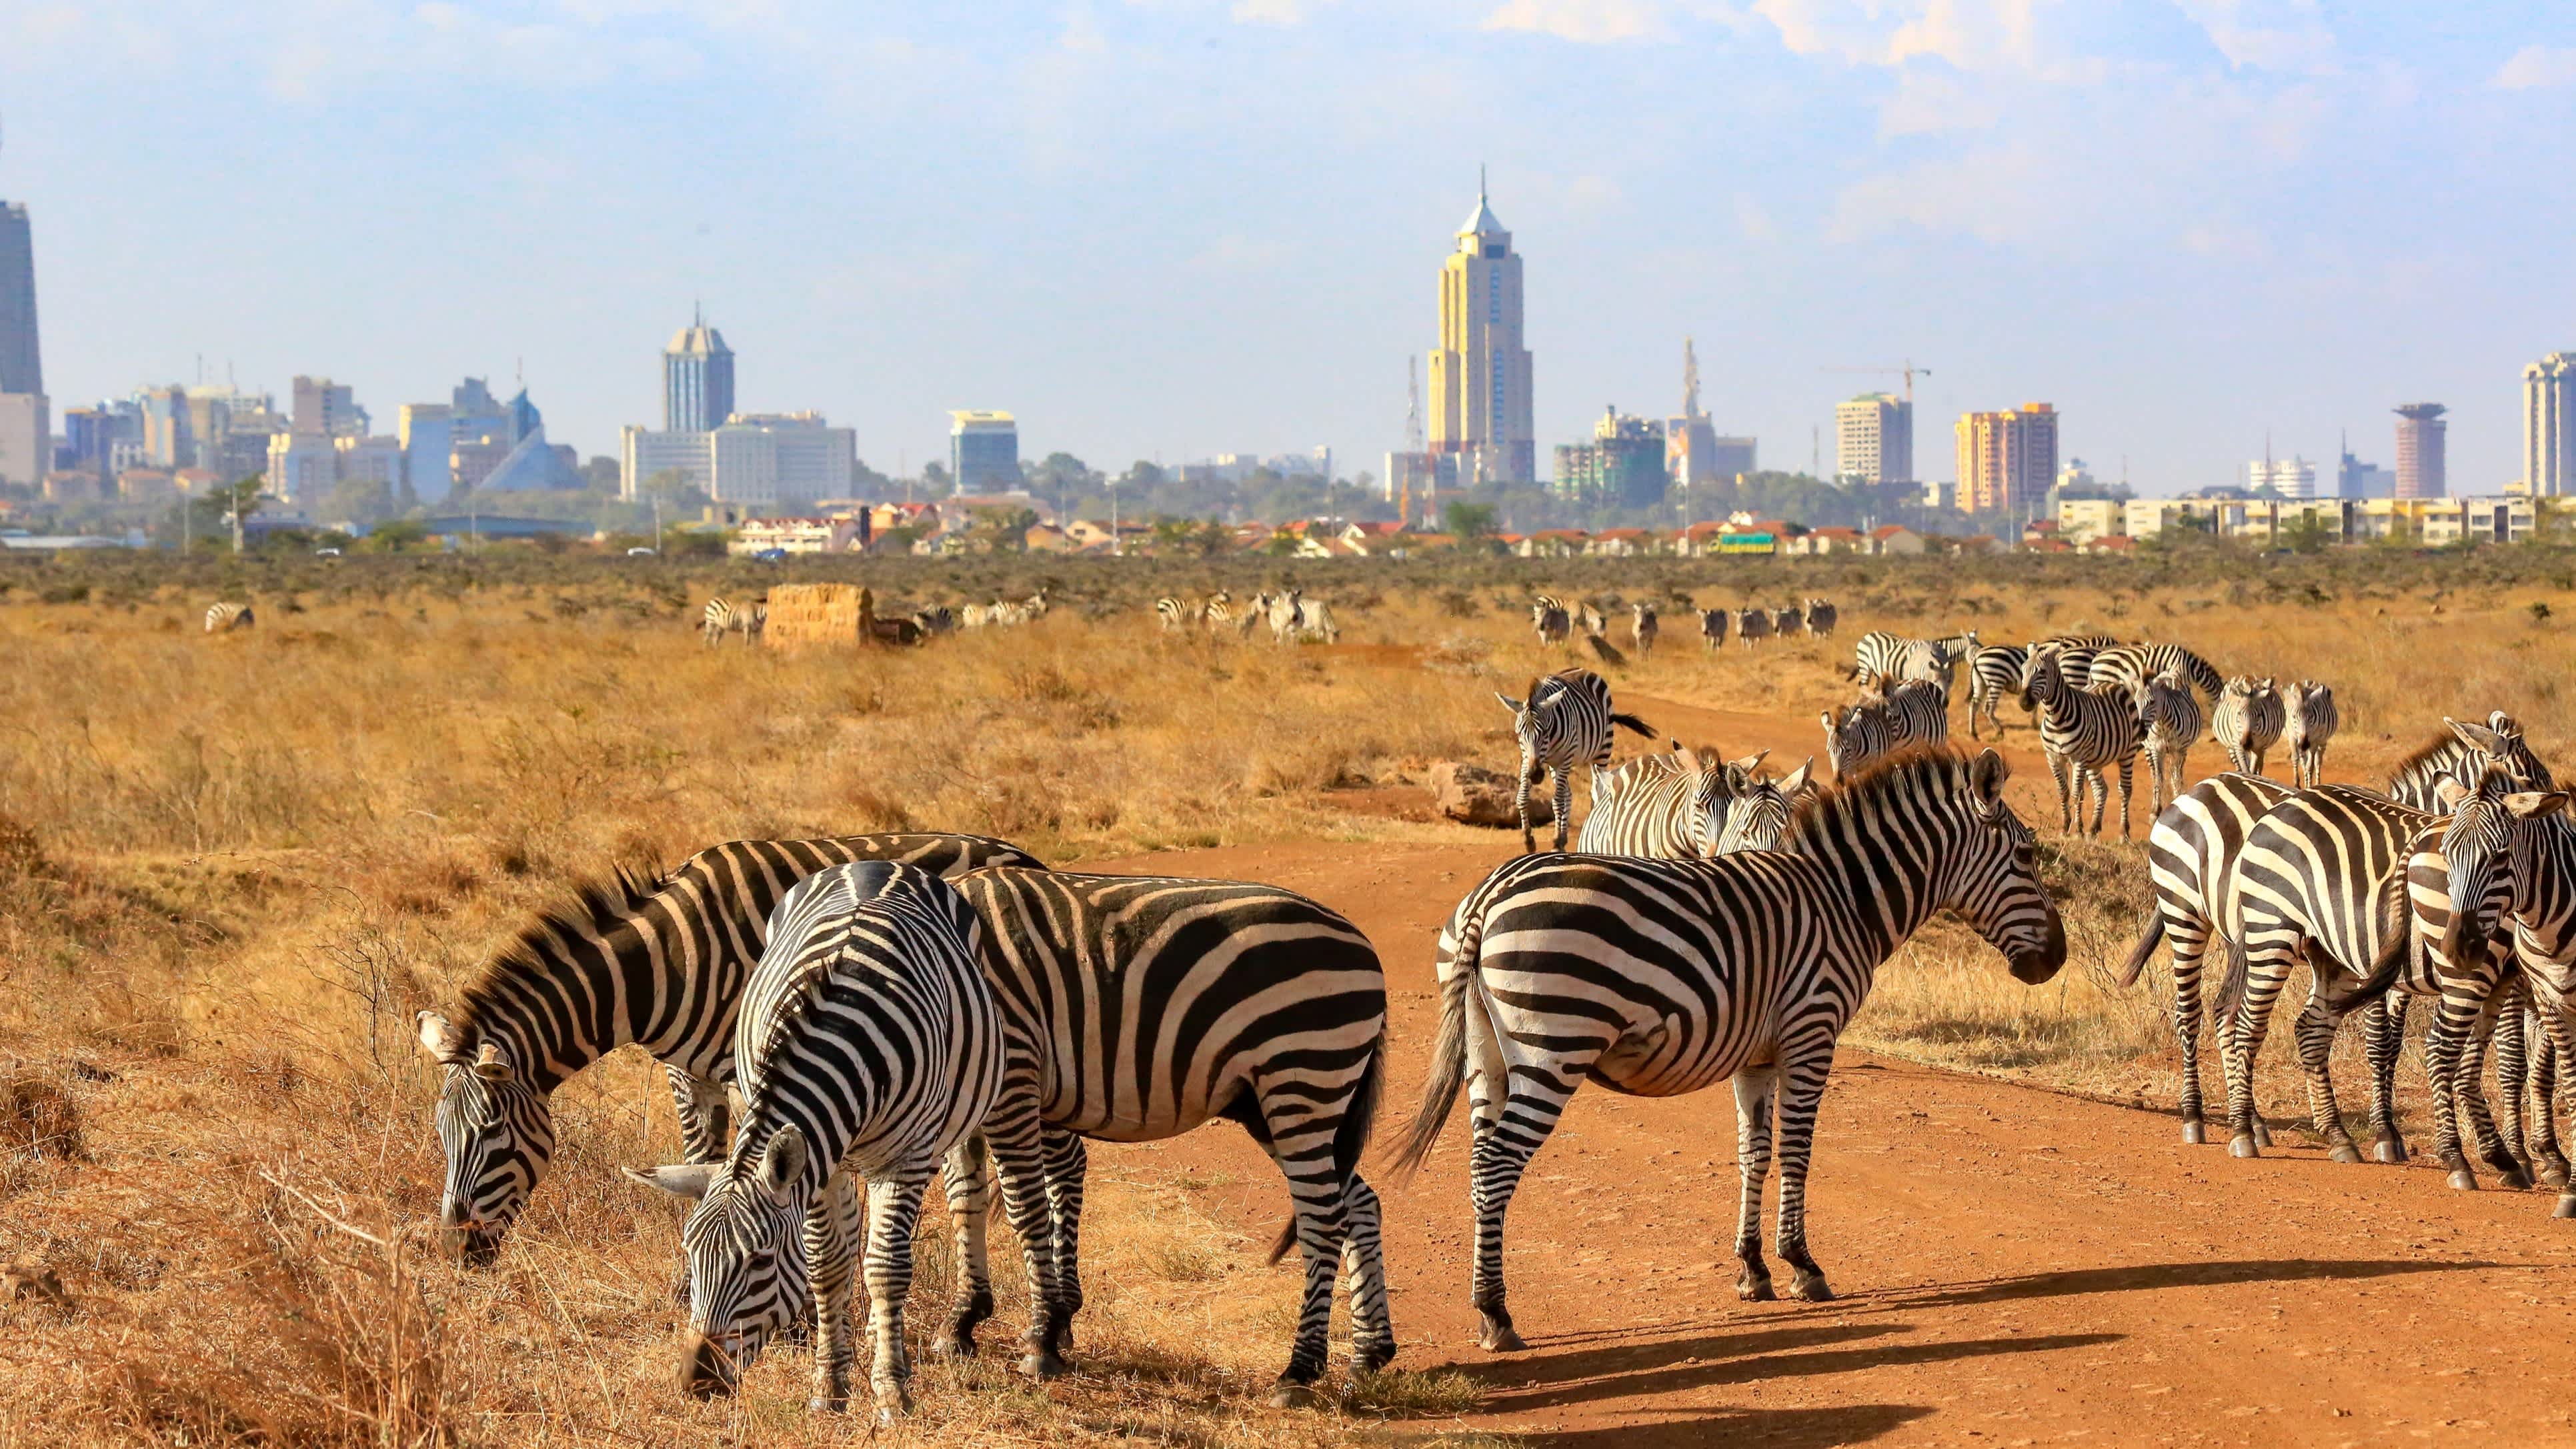 Africa, Kenya, Zebras graze in  Nairobi national park with the Nairobi skyline in the background.